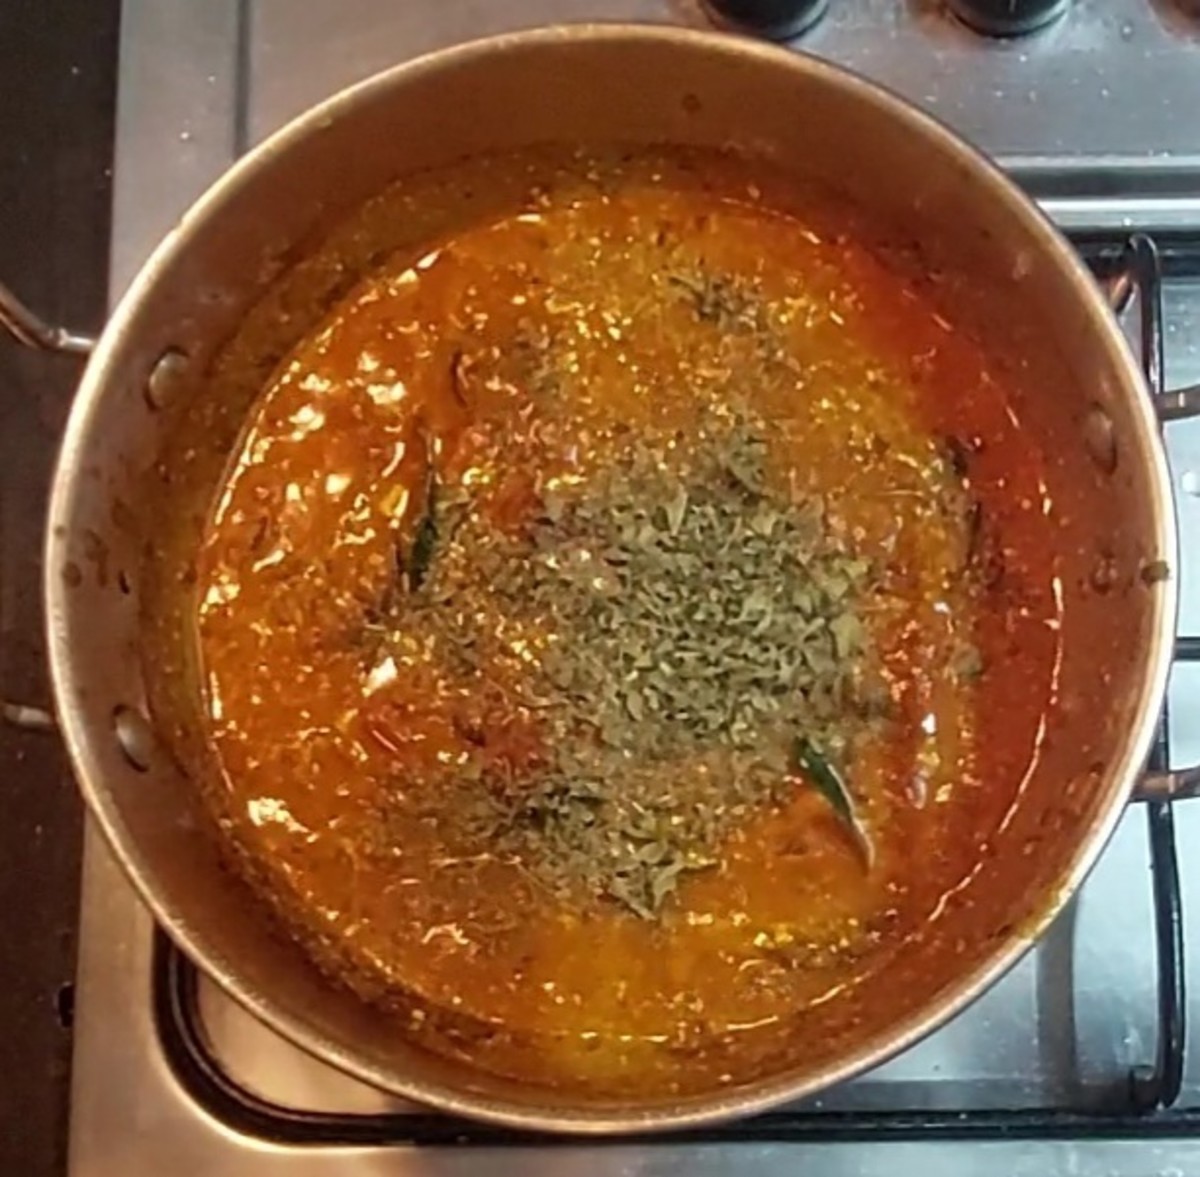 Add 1 teaspoon crushed kasuri methi, mix.